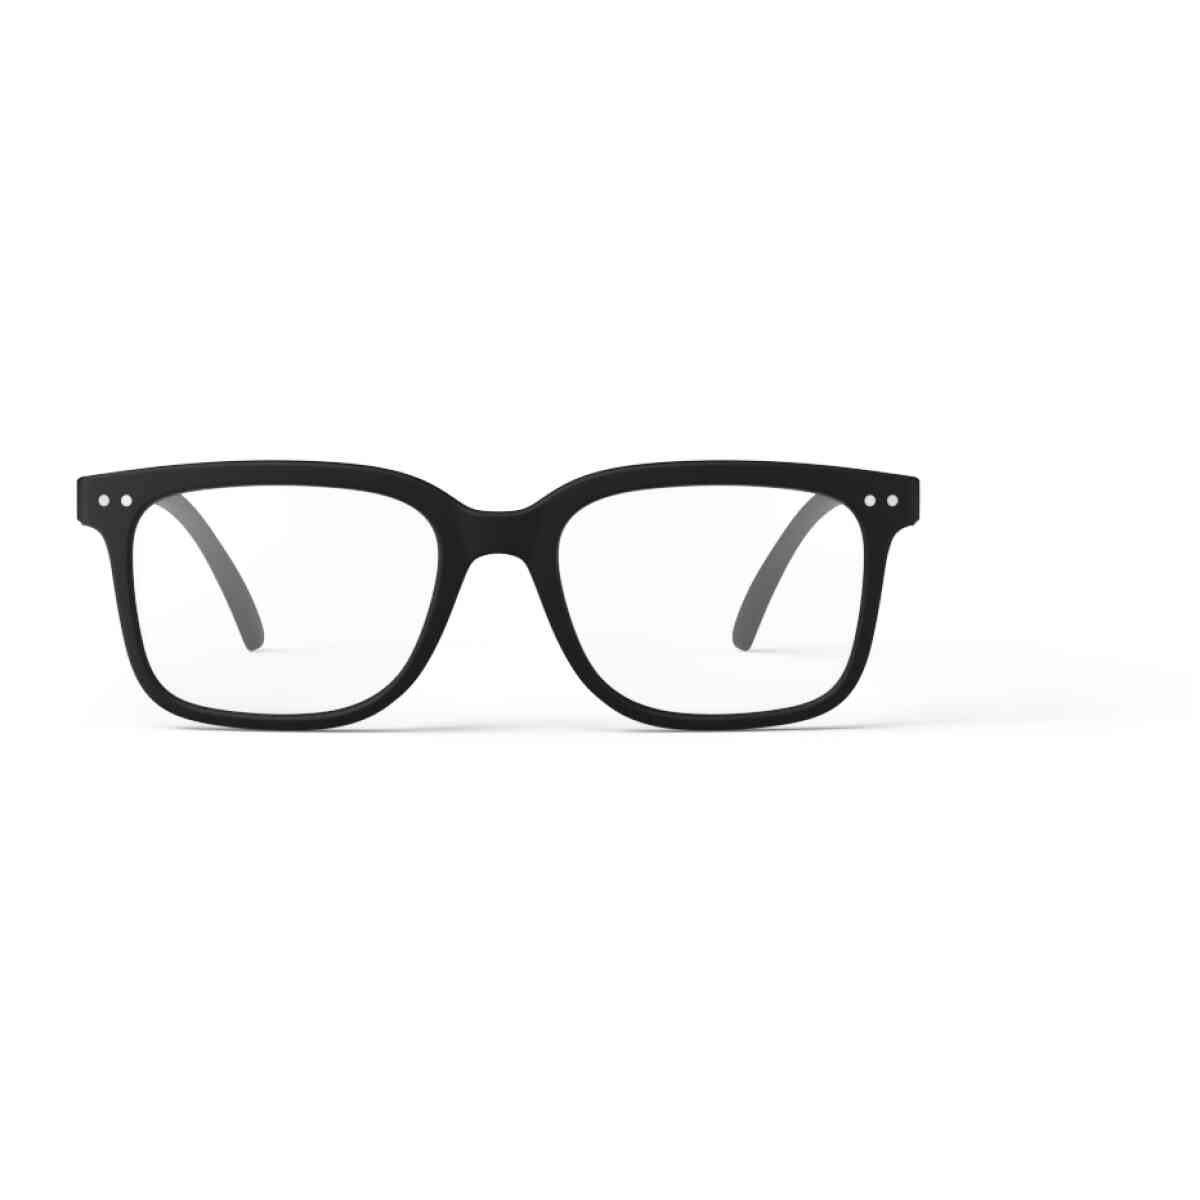 l black reading glasses